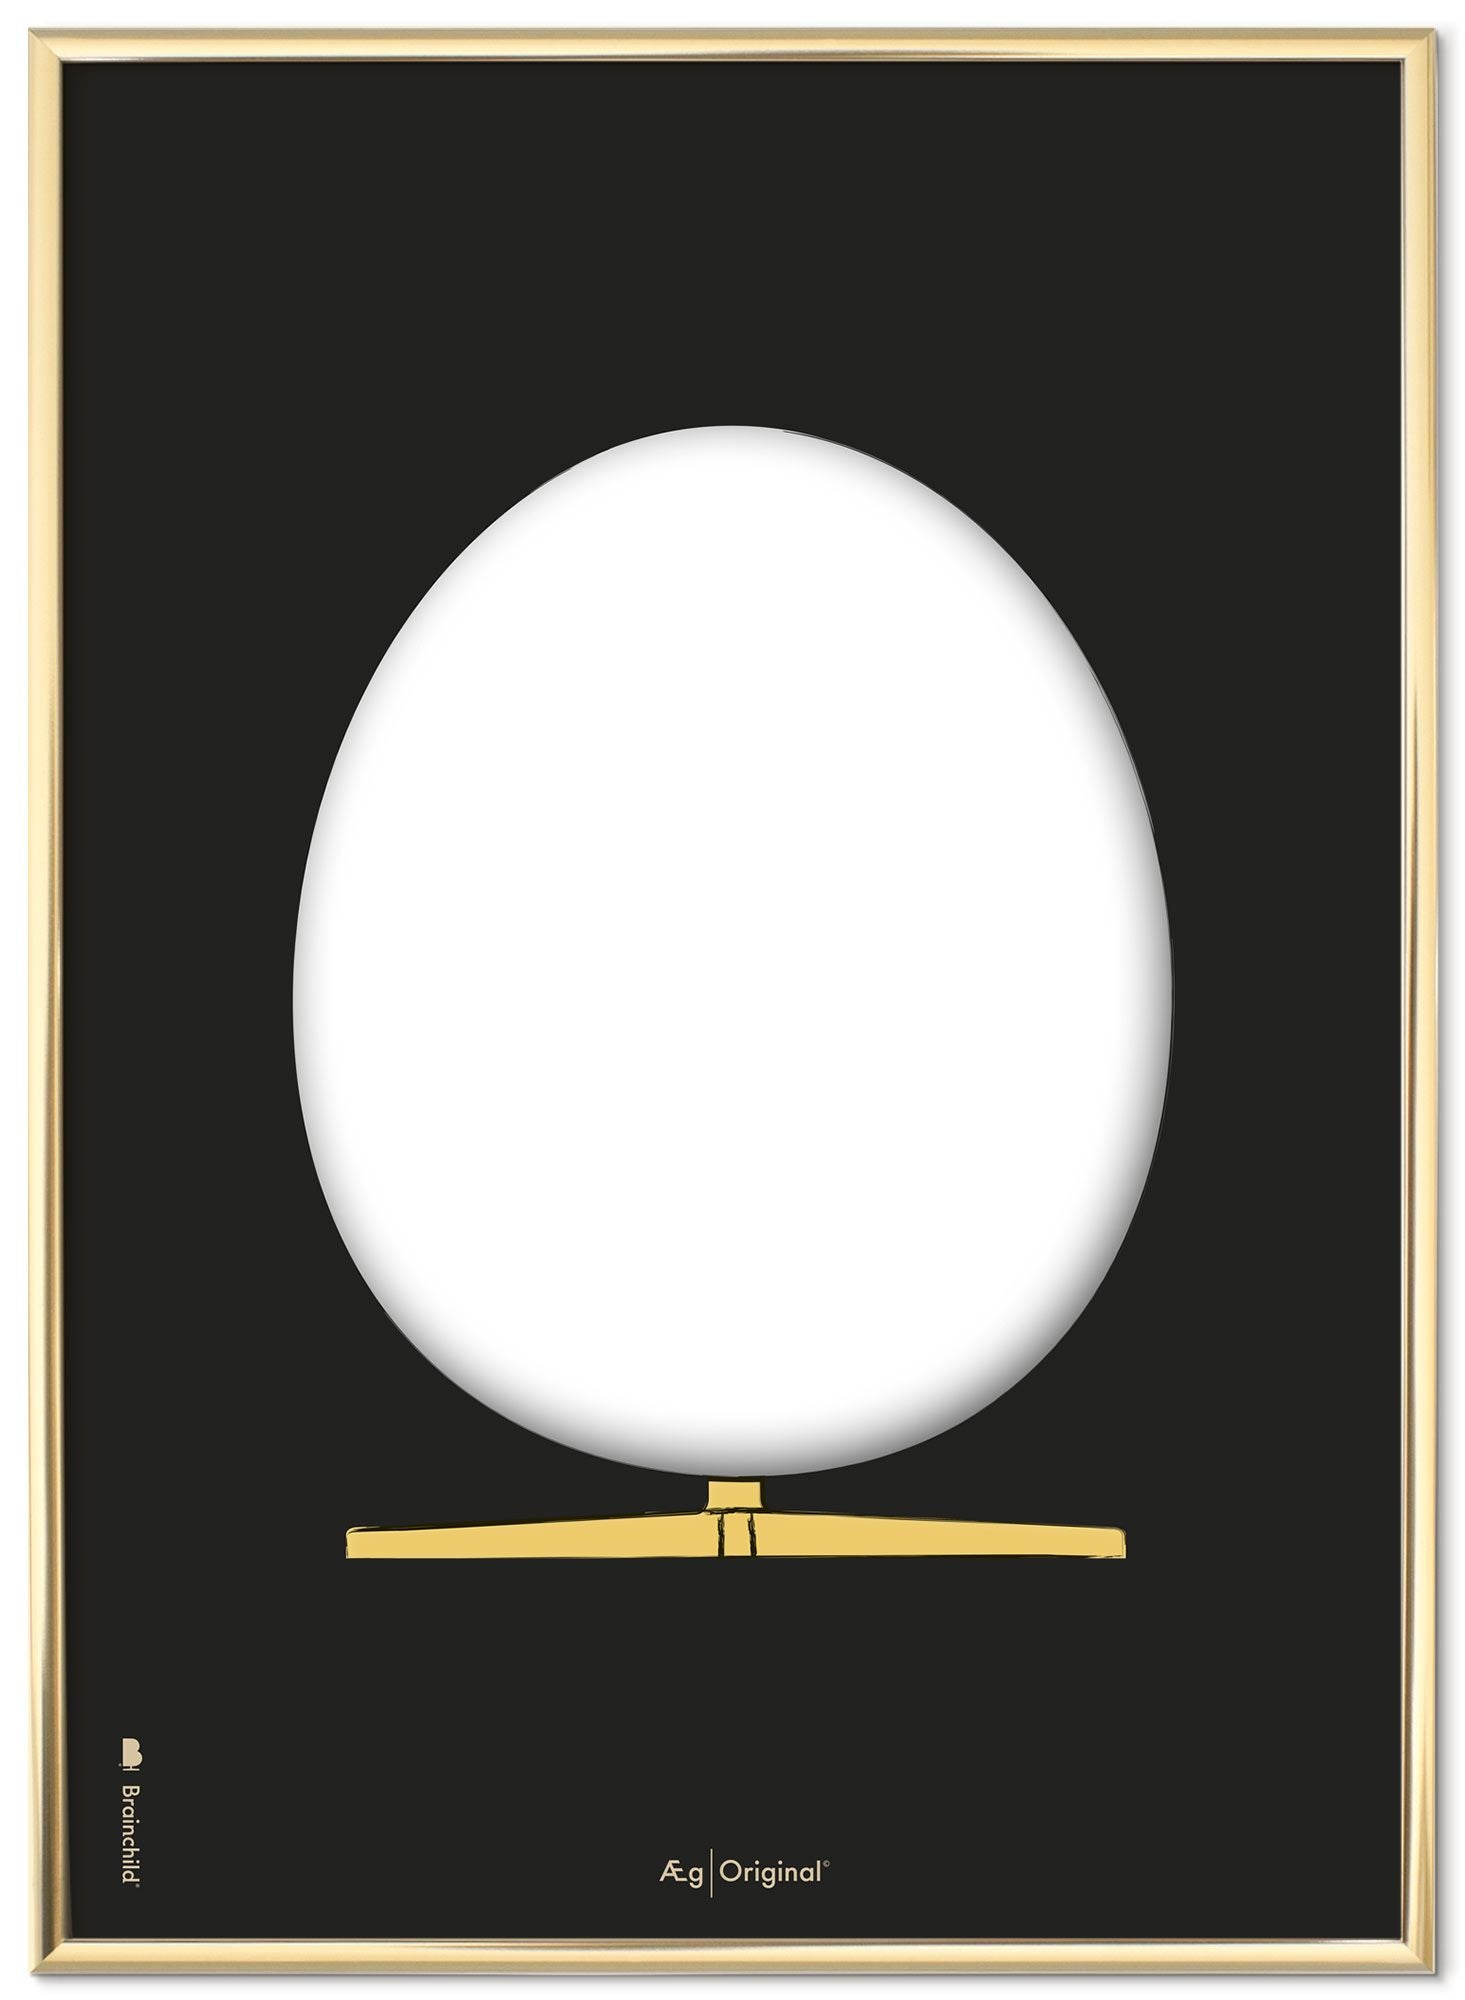 Brainchild The Egg Design Sketch Affisch Frame Made av mässingsfärgad metall 70x100 cm, svart bakgrund